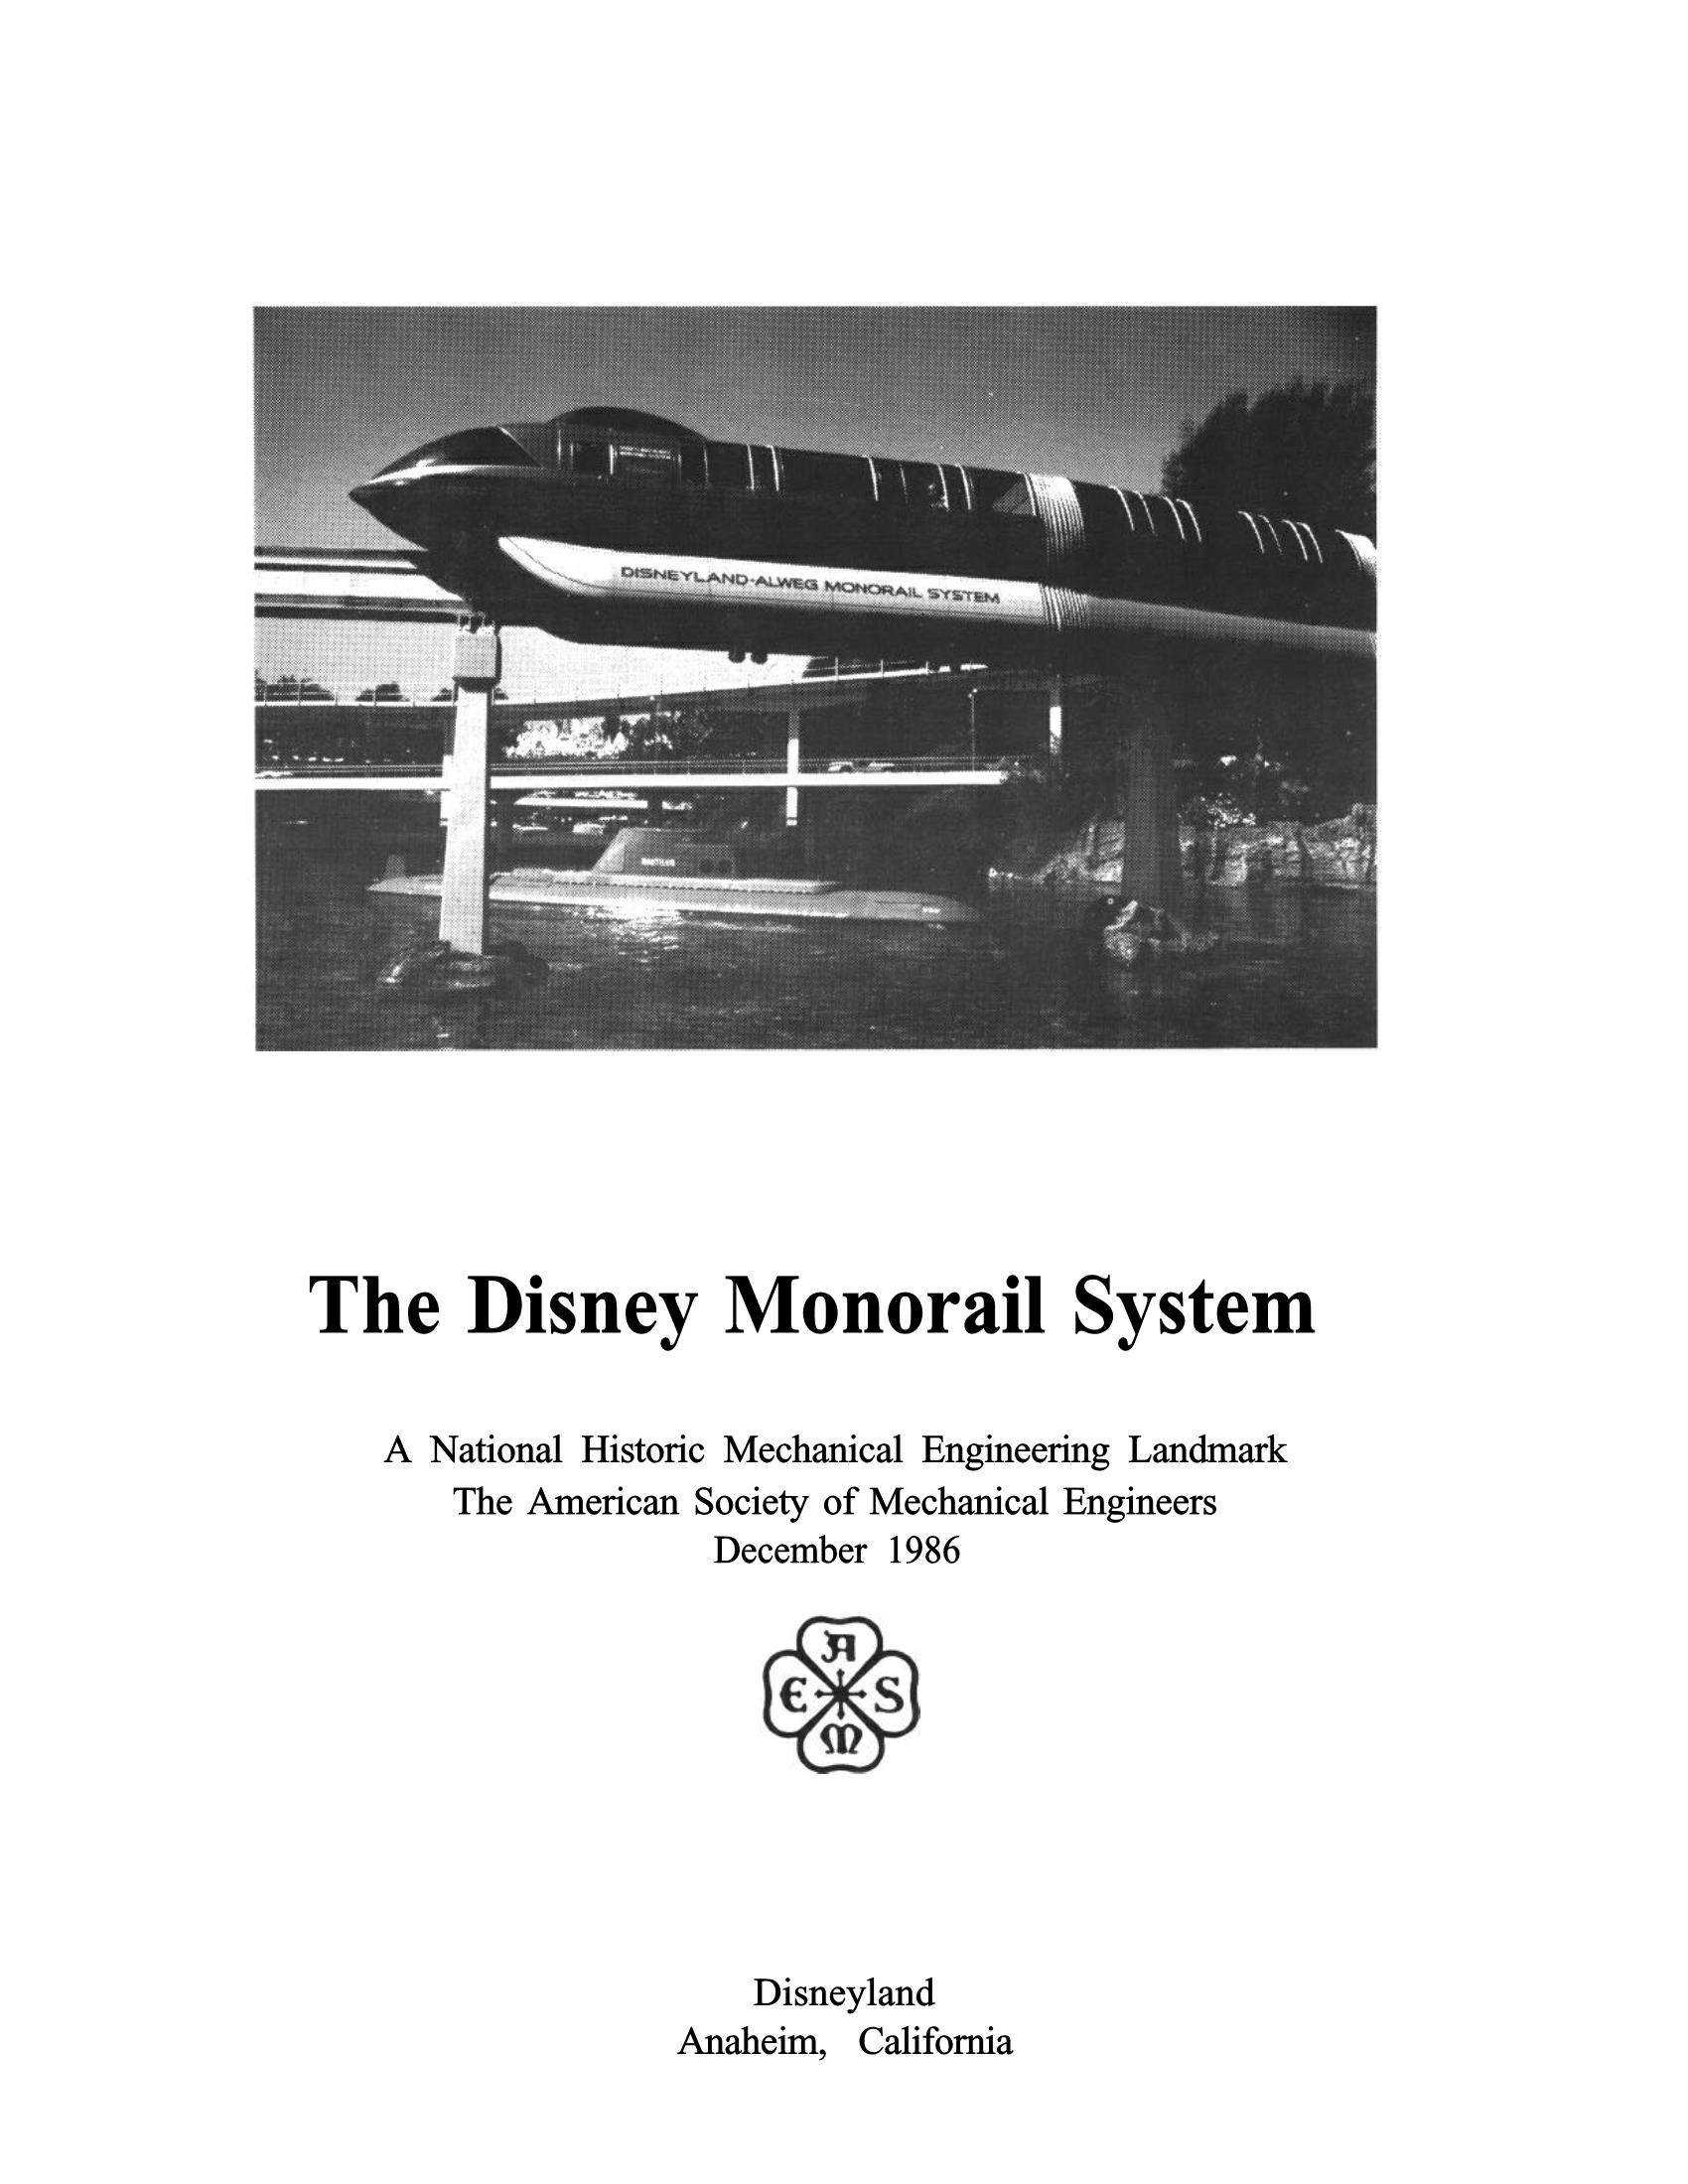 Disneyland Monorail System 1959 ASME Page 1